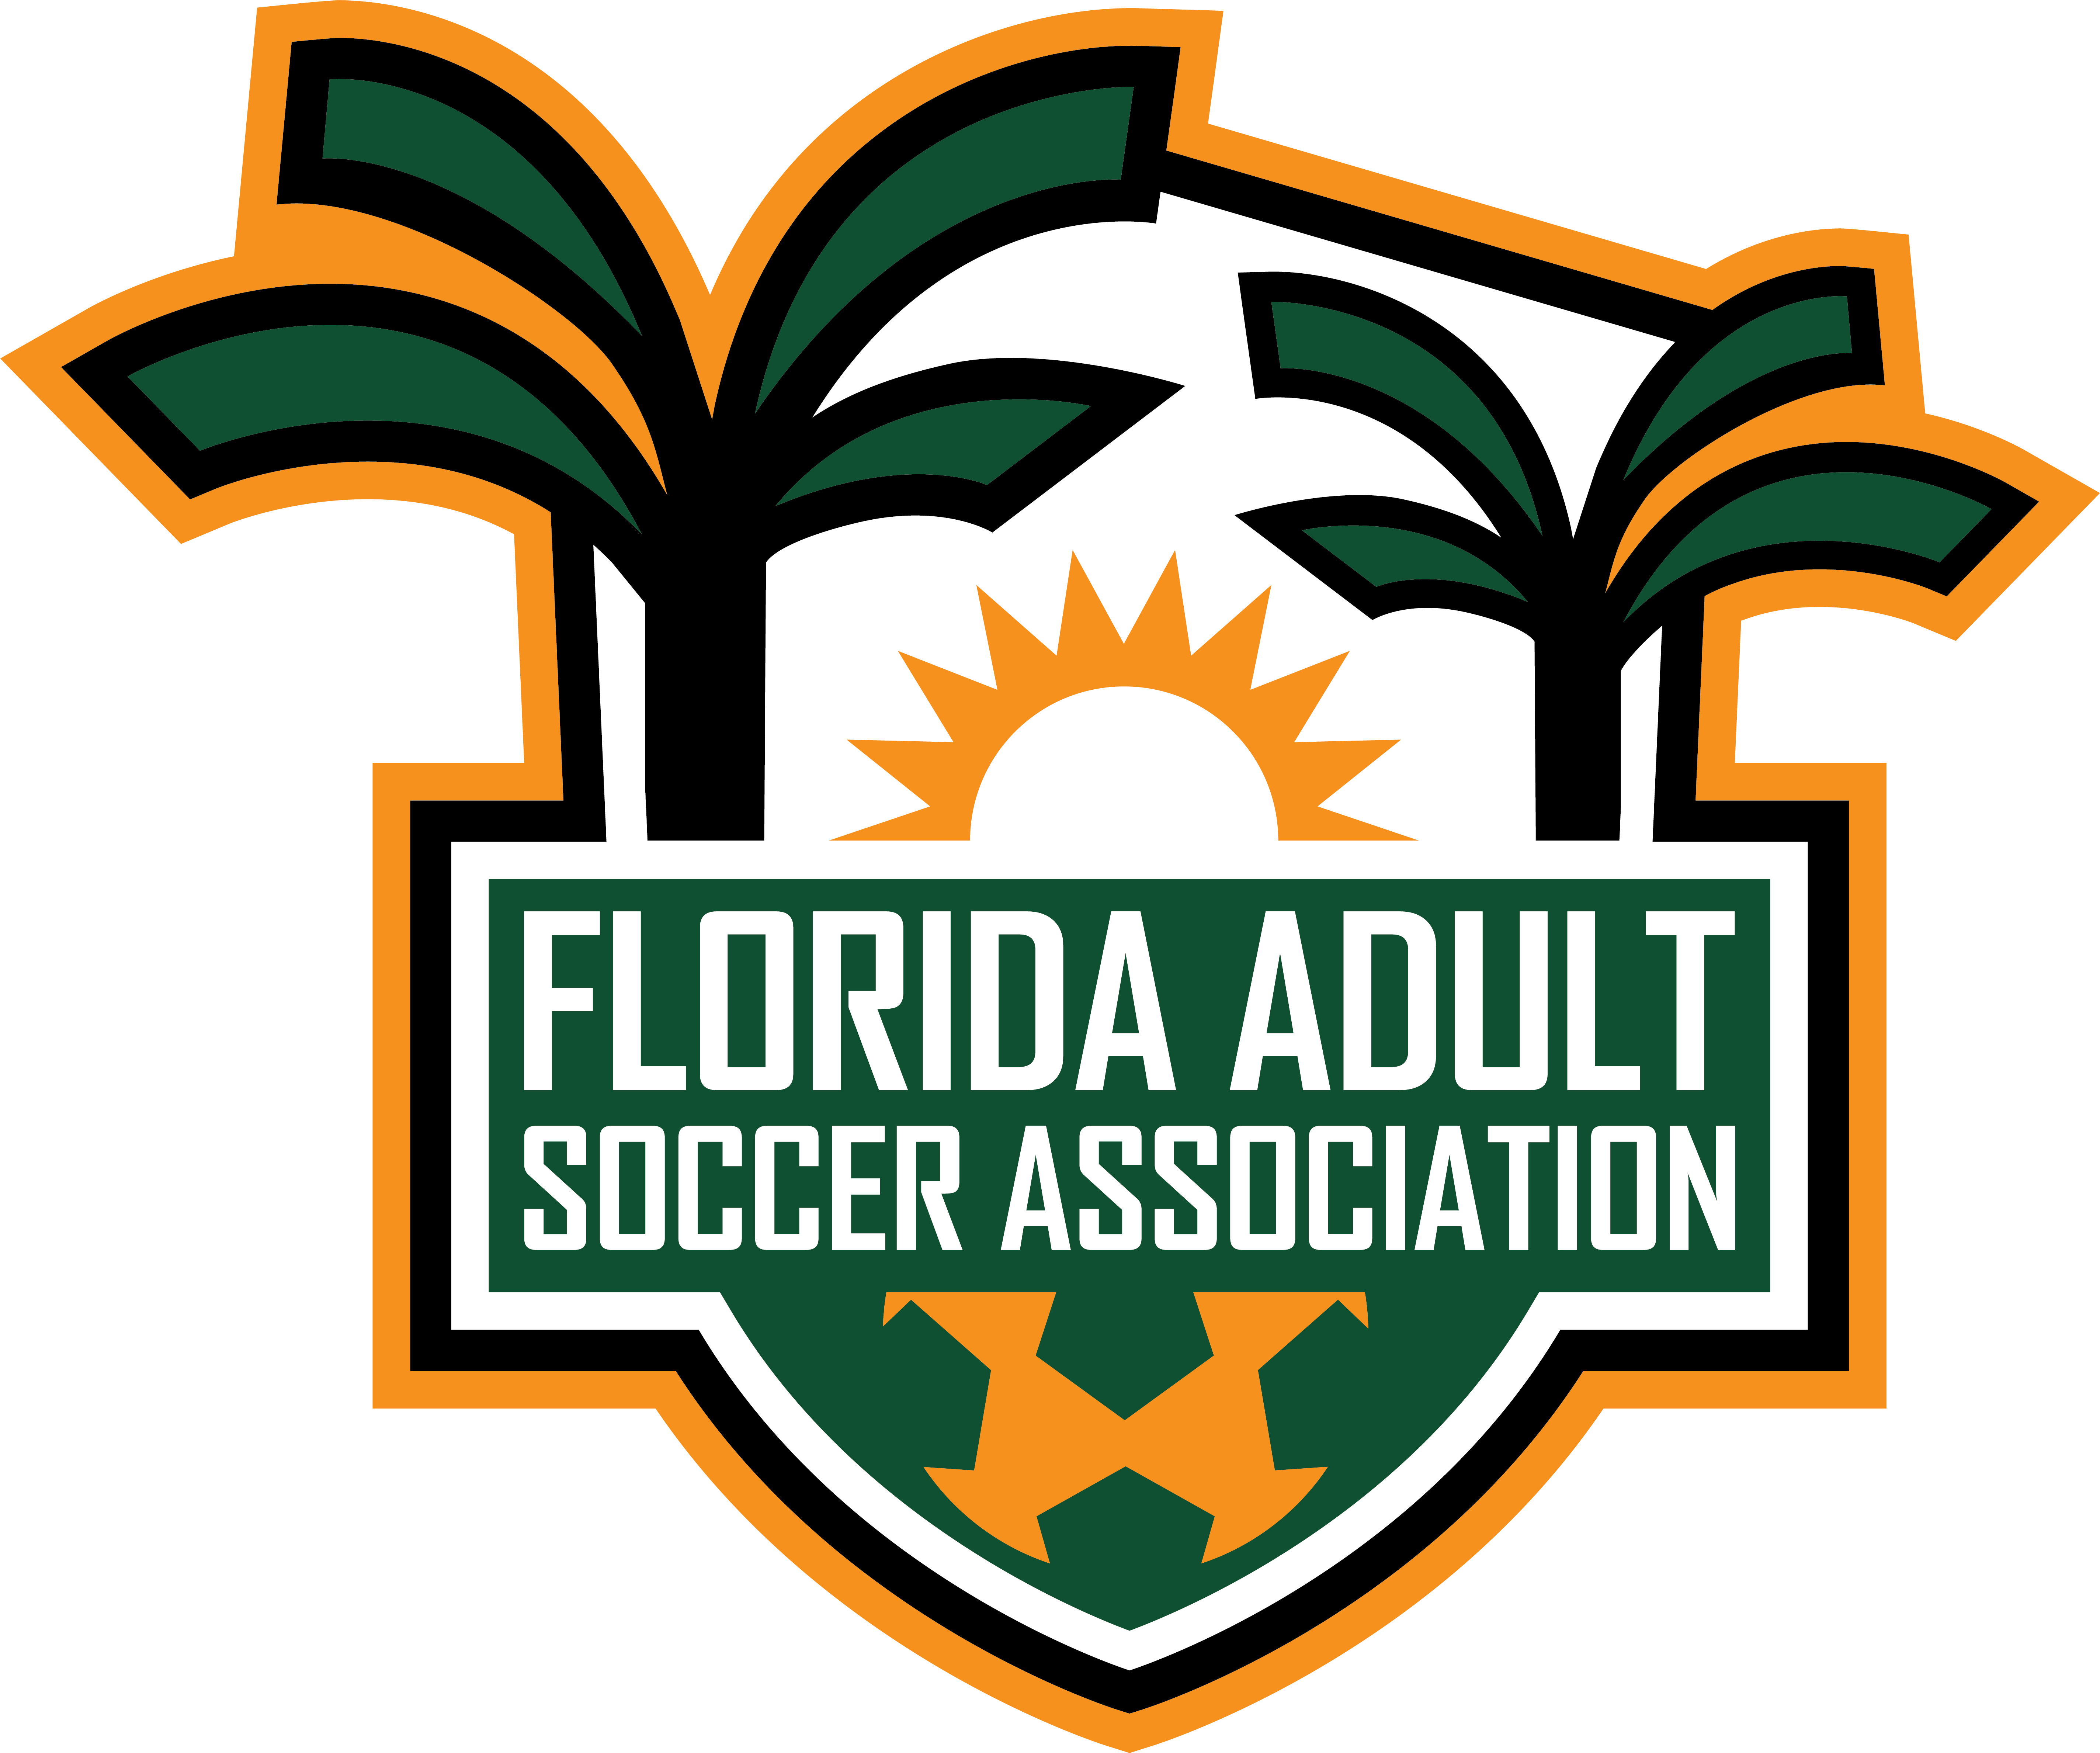 Florida Adult Soccer Association logo